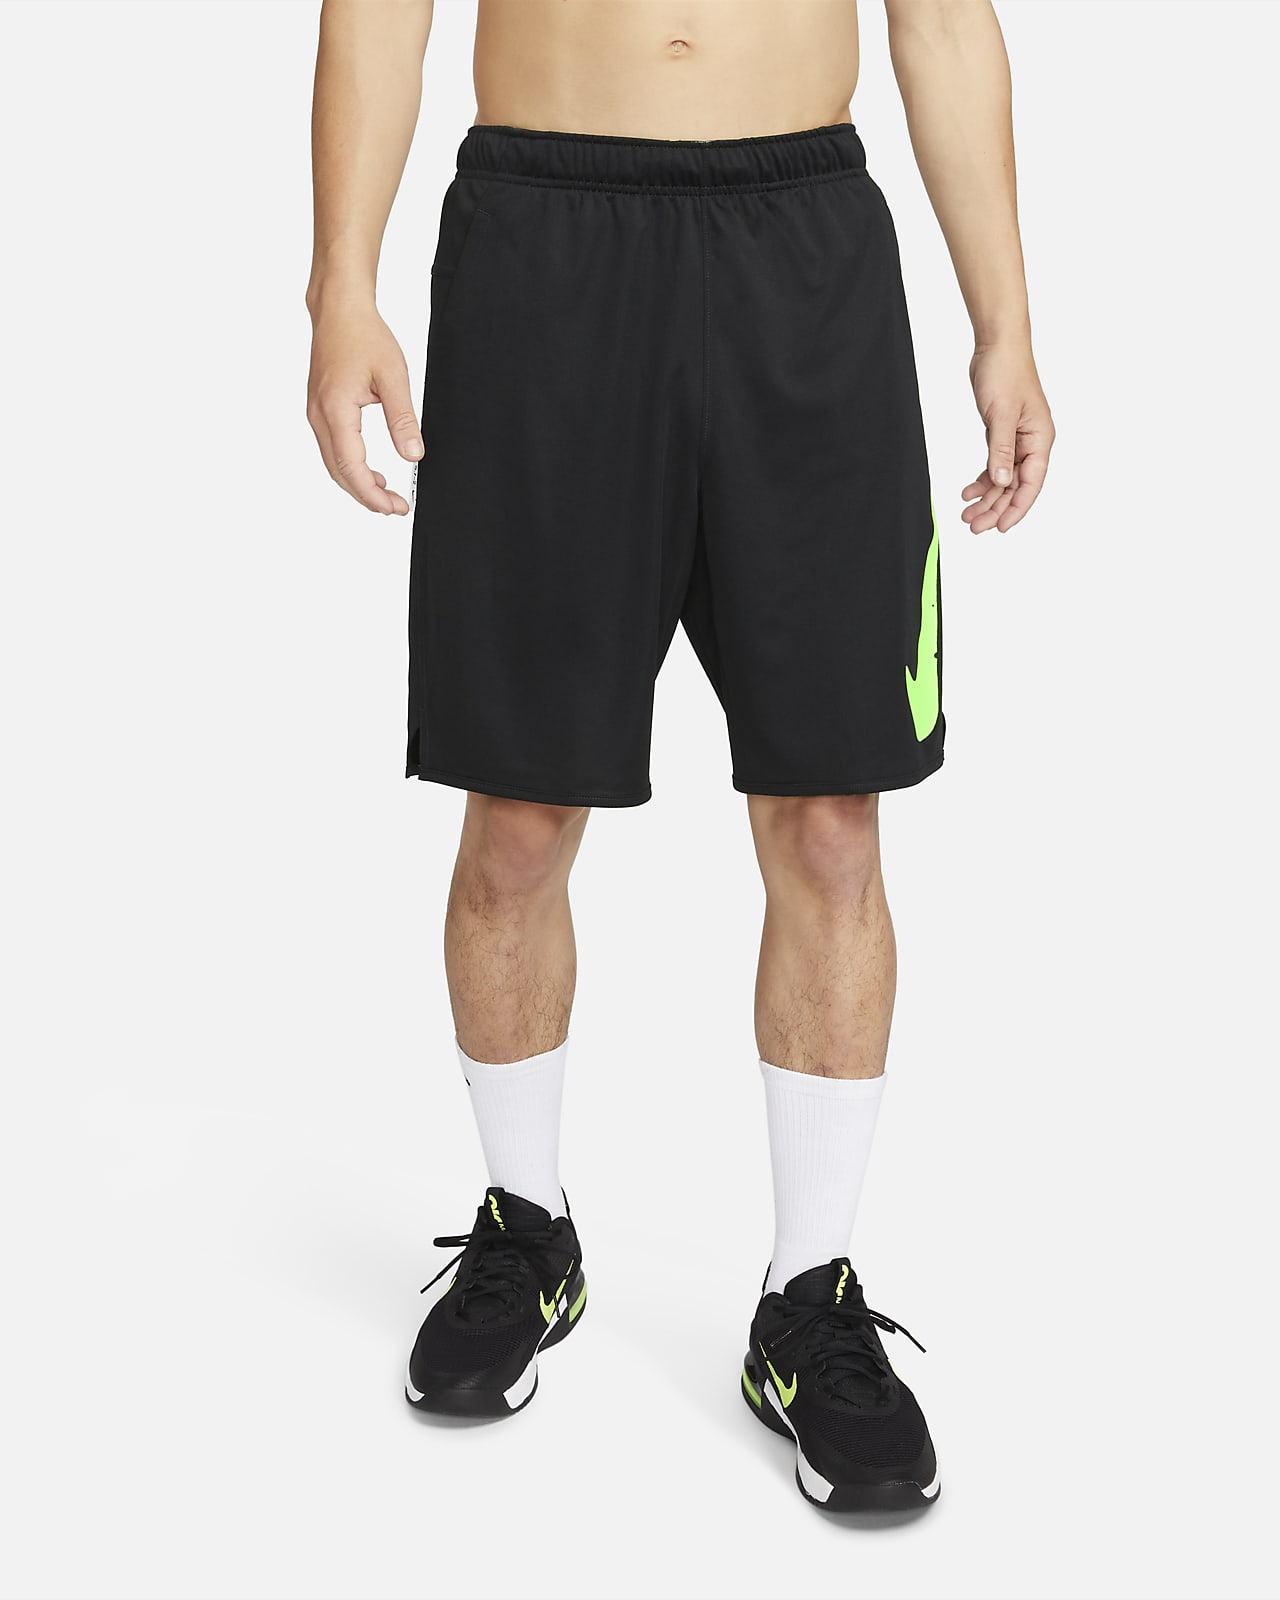 Nike Totality Men's Dri-FIT Tapered Versatile Trousers. Nike CA